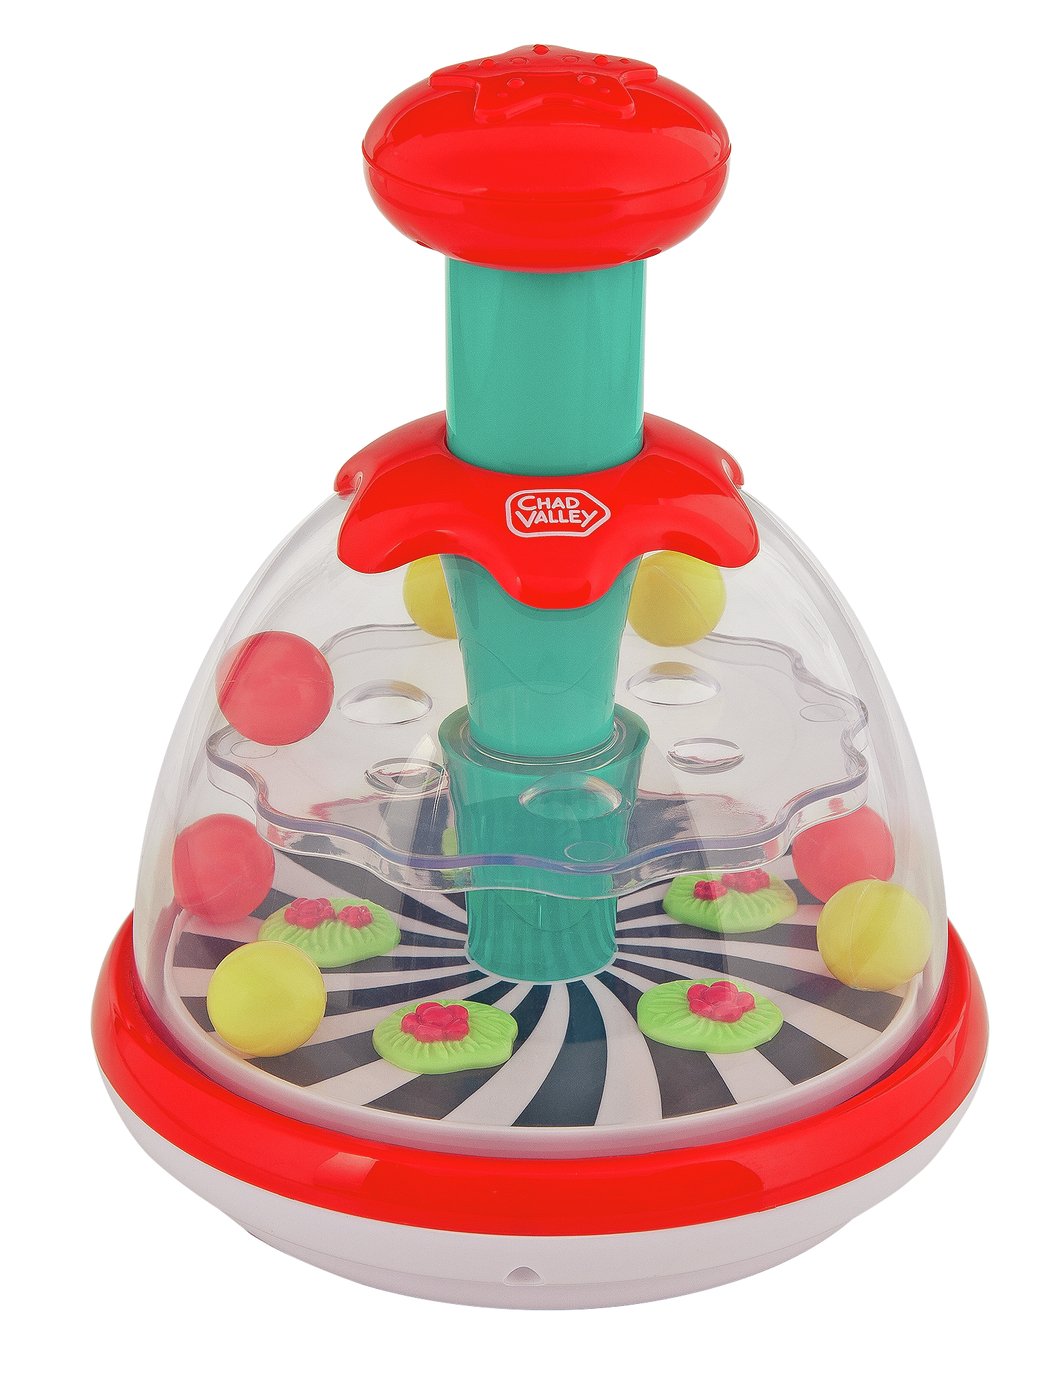 spinning toys argos